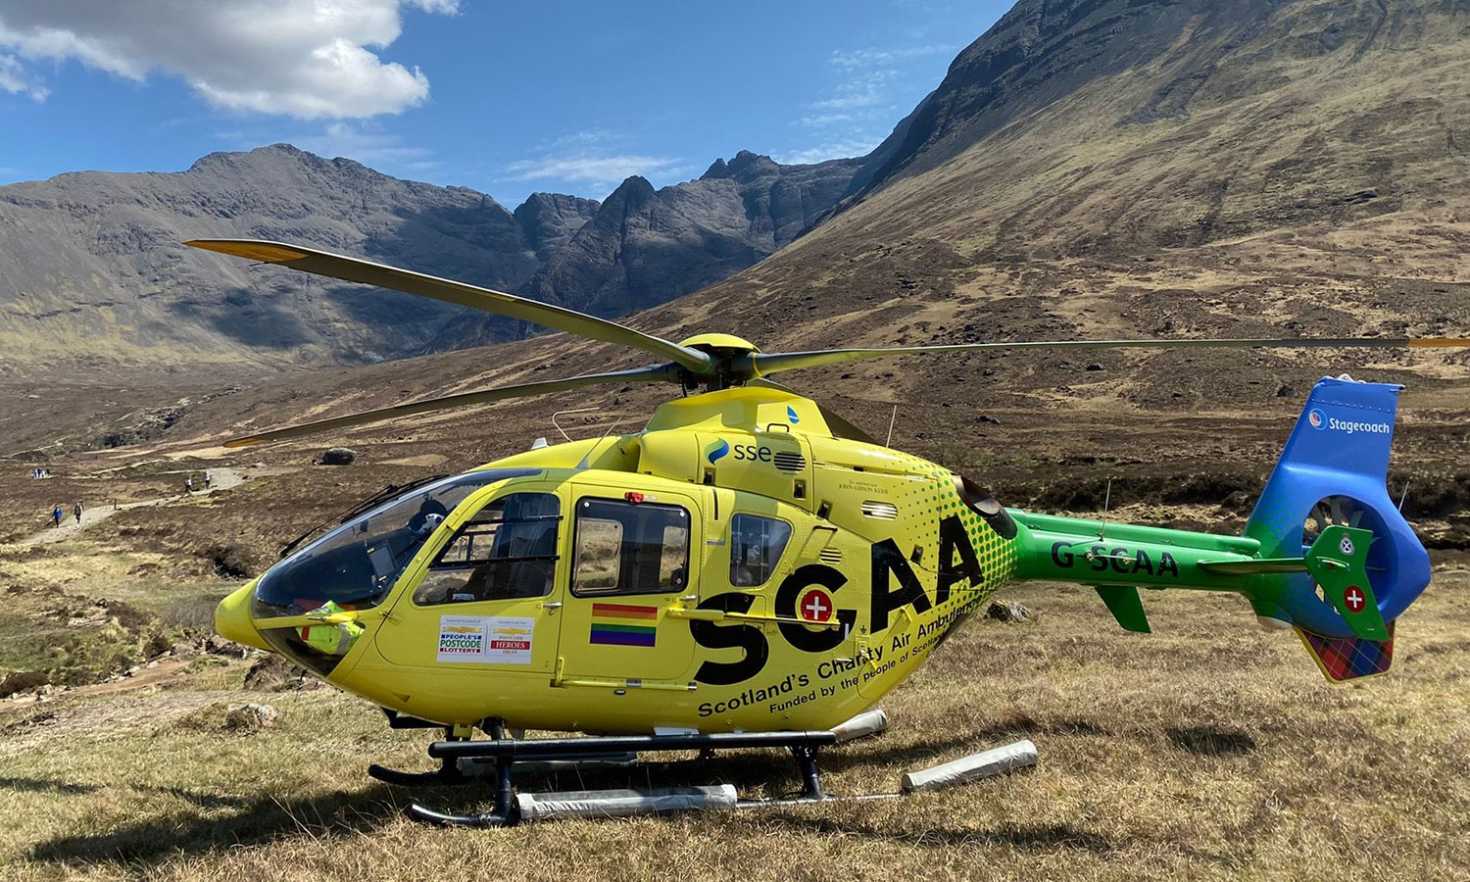 Scottish Charity Air Ambulance in the Scottish hills